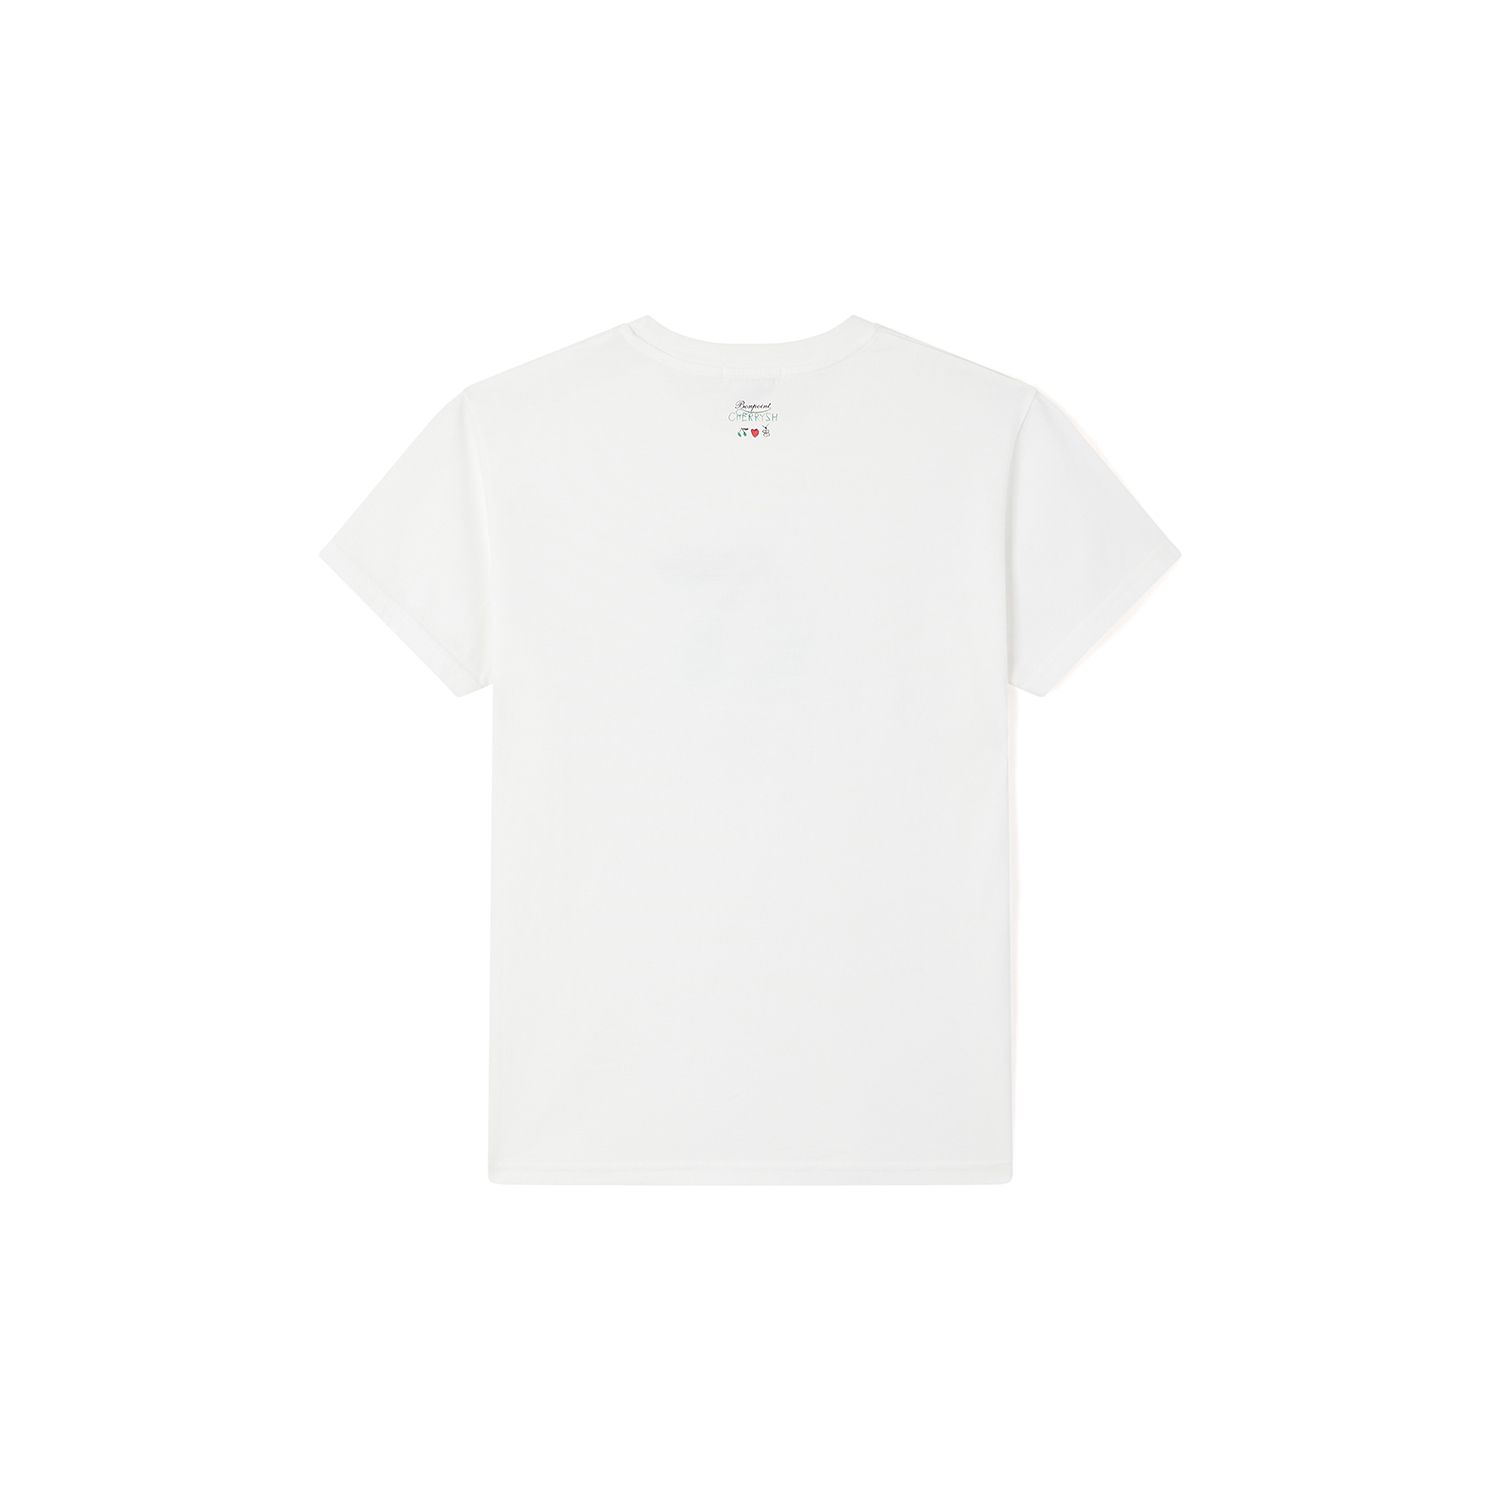 CHERRYSH THE PLANET Tシャツ (大人サイズ)